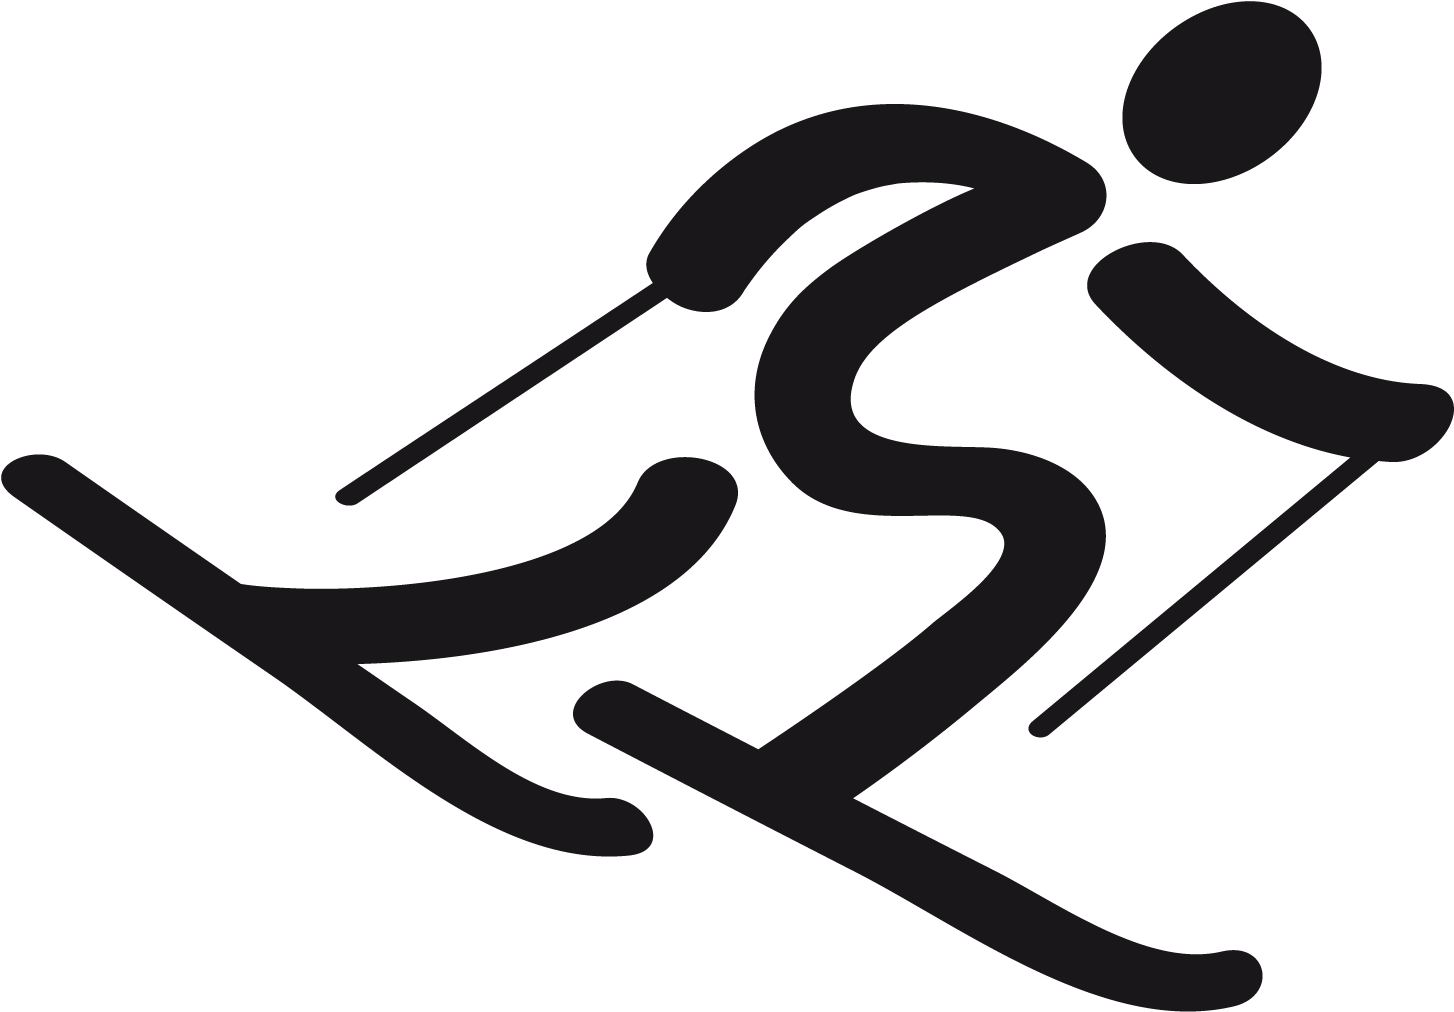 17 Alpine Olympic Icon Image - Alpine Skiing Olympic Symbol (3300x2550)